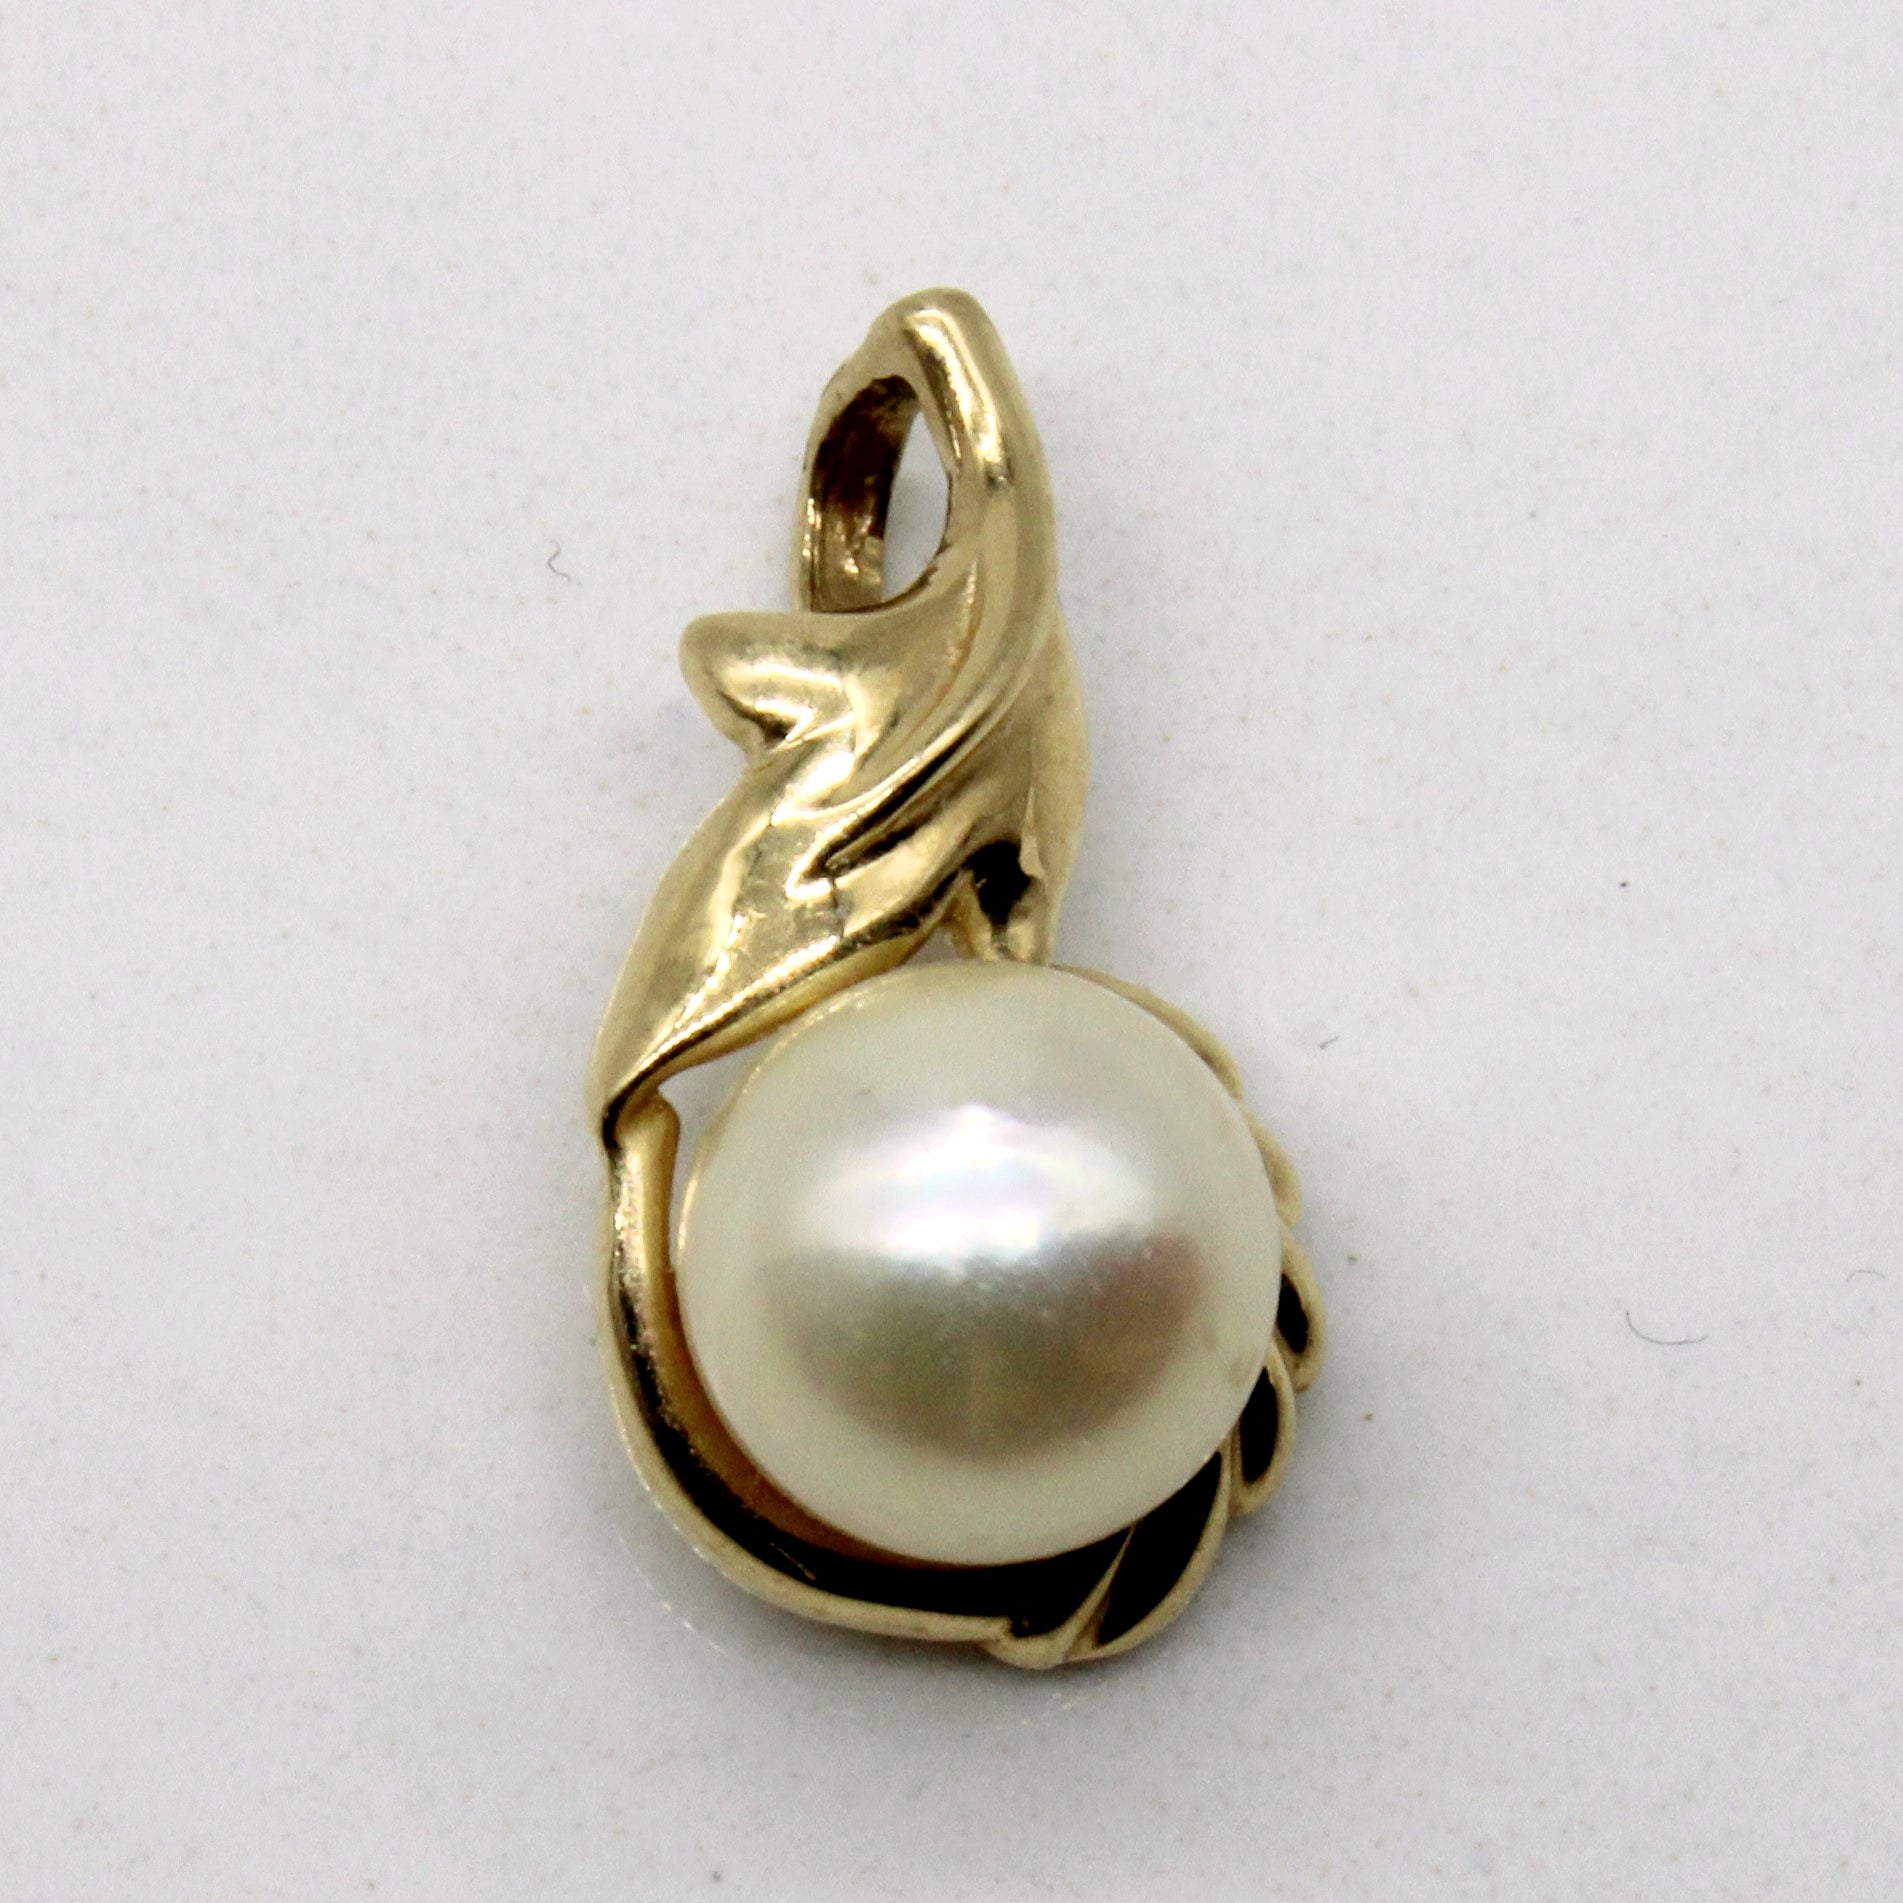 Ornate Pearl Pendant